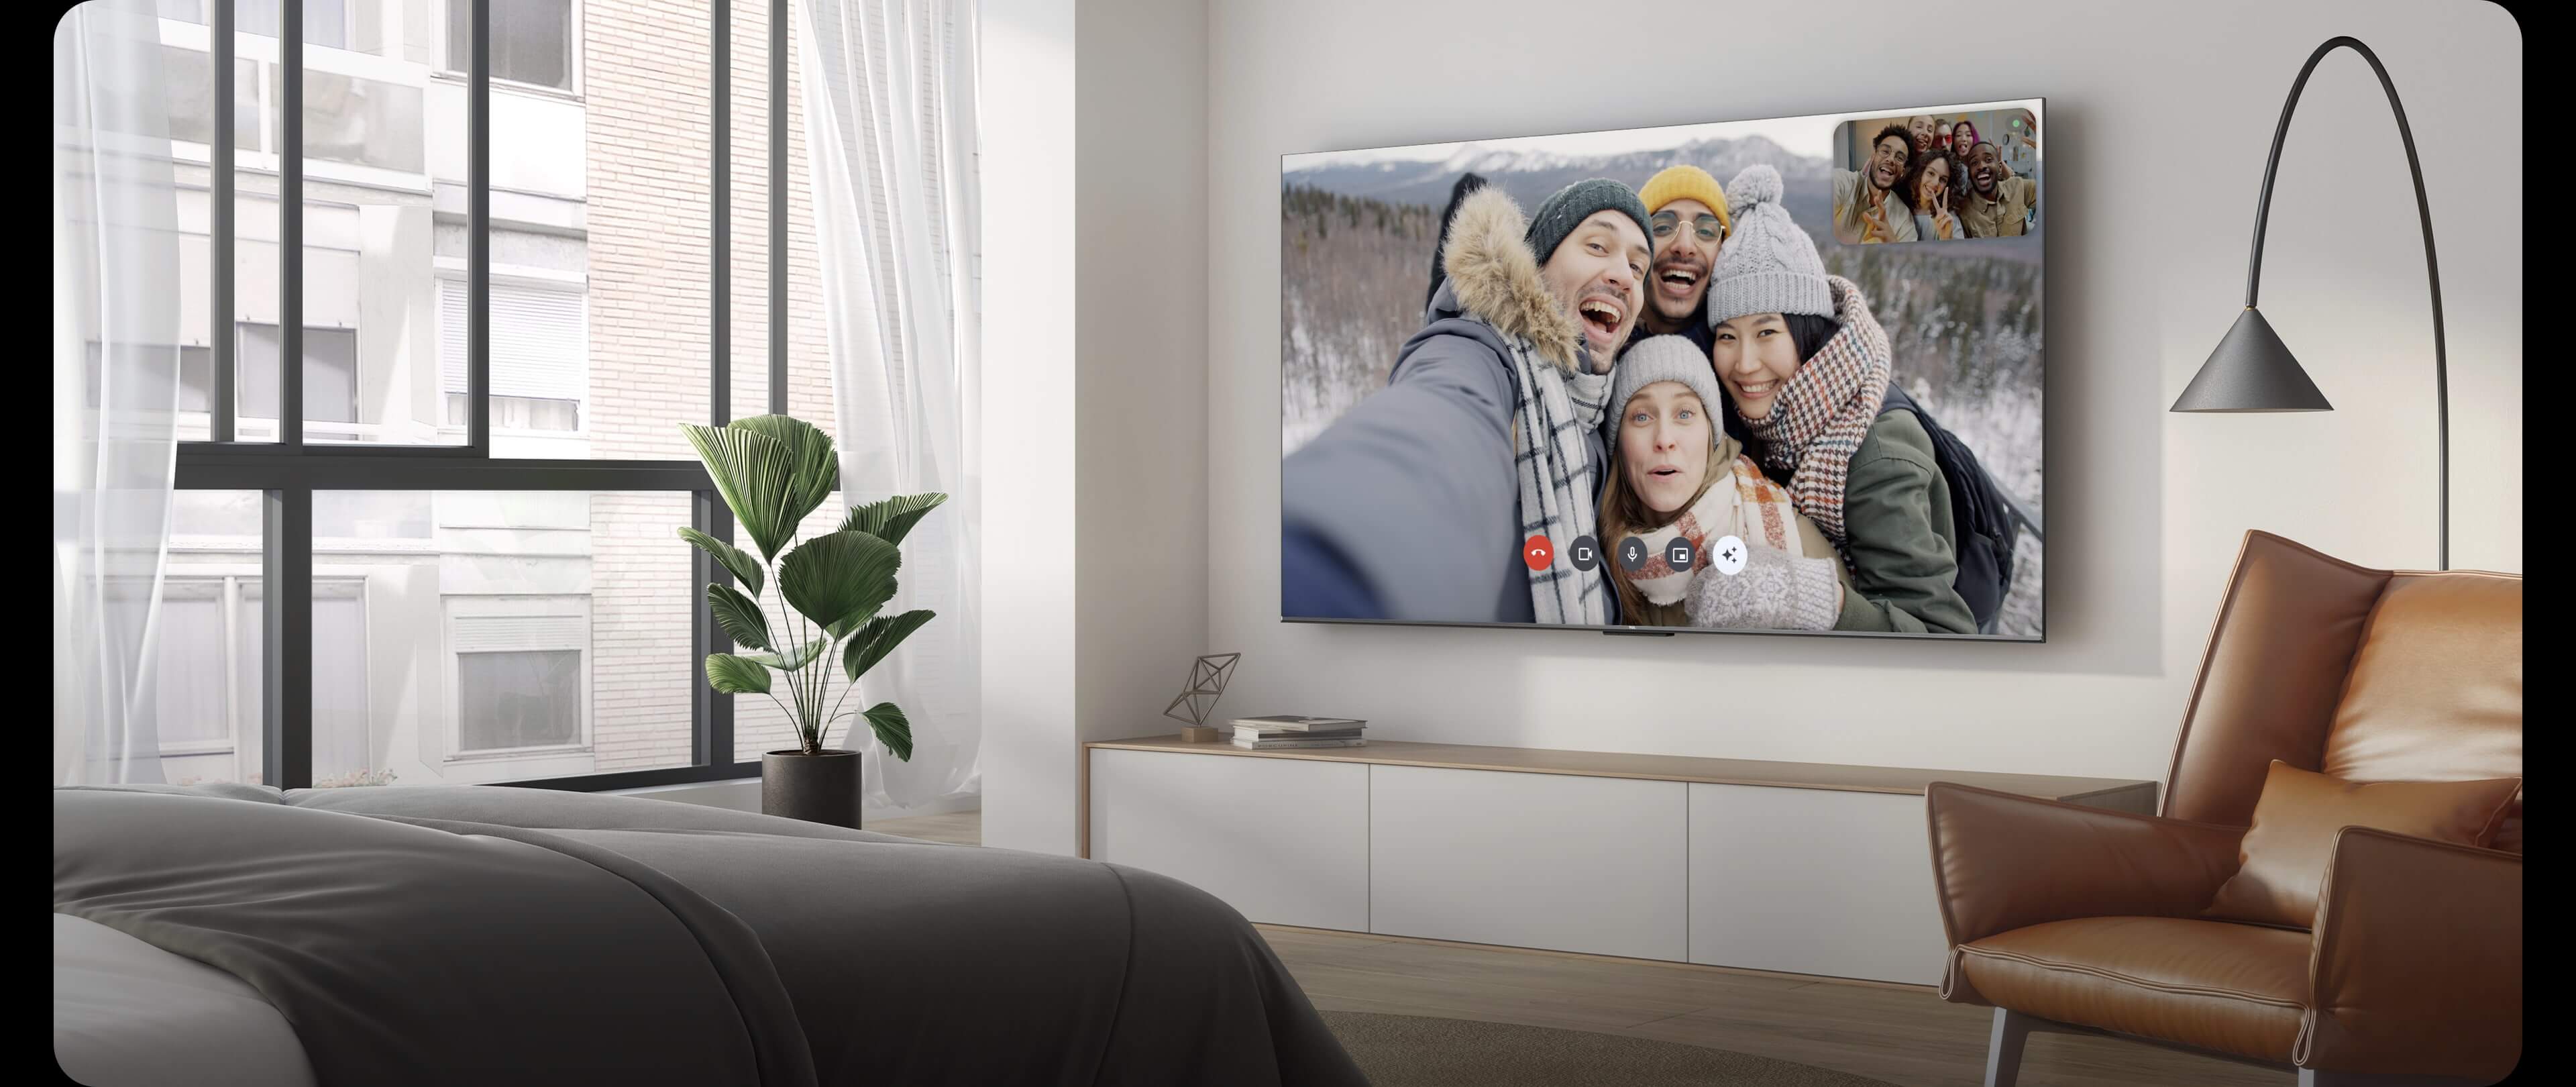 TCL QD-Mini LED TV   - INTERACCIÓN INTELIGENTE